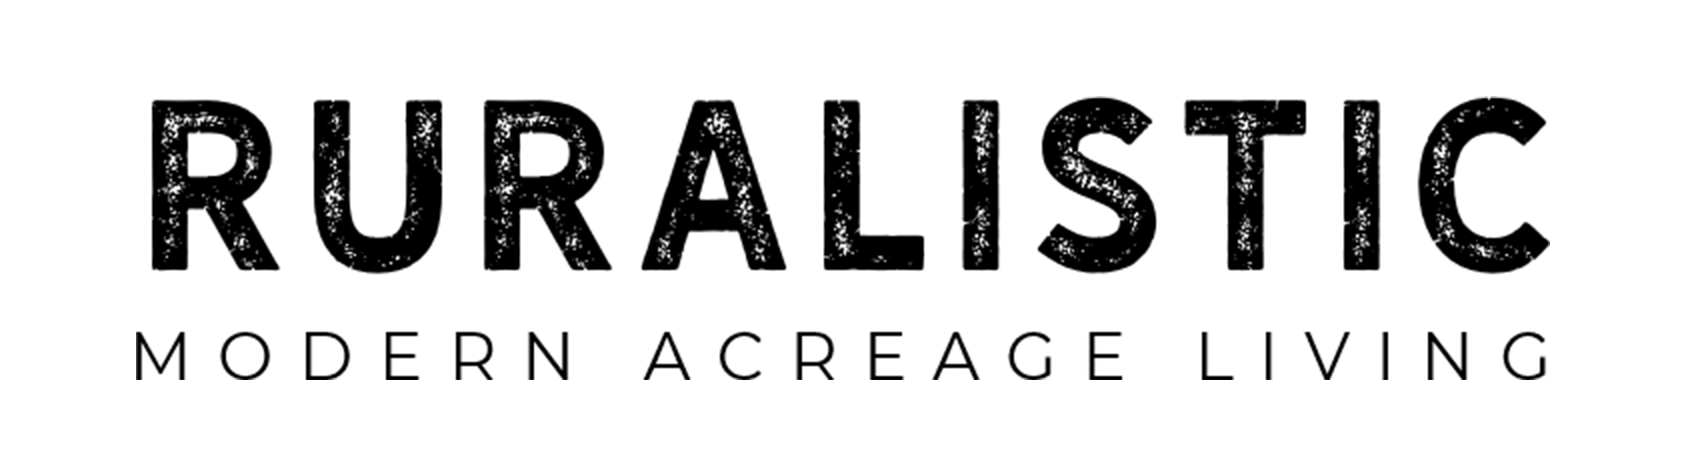 ruralistic logo